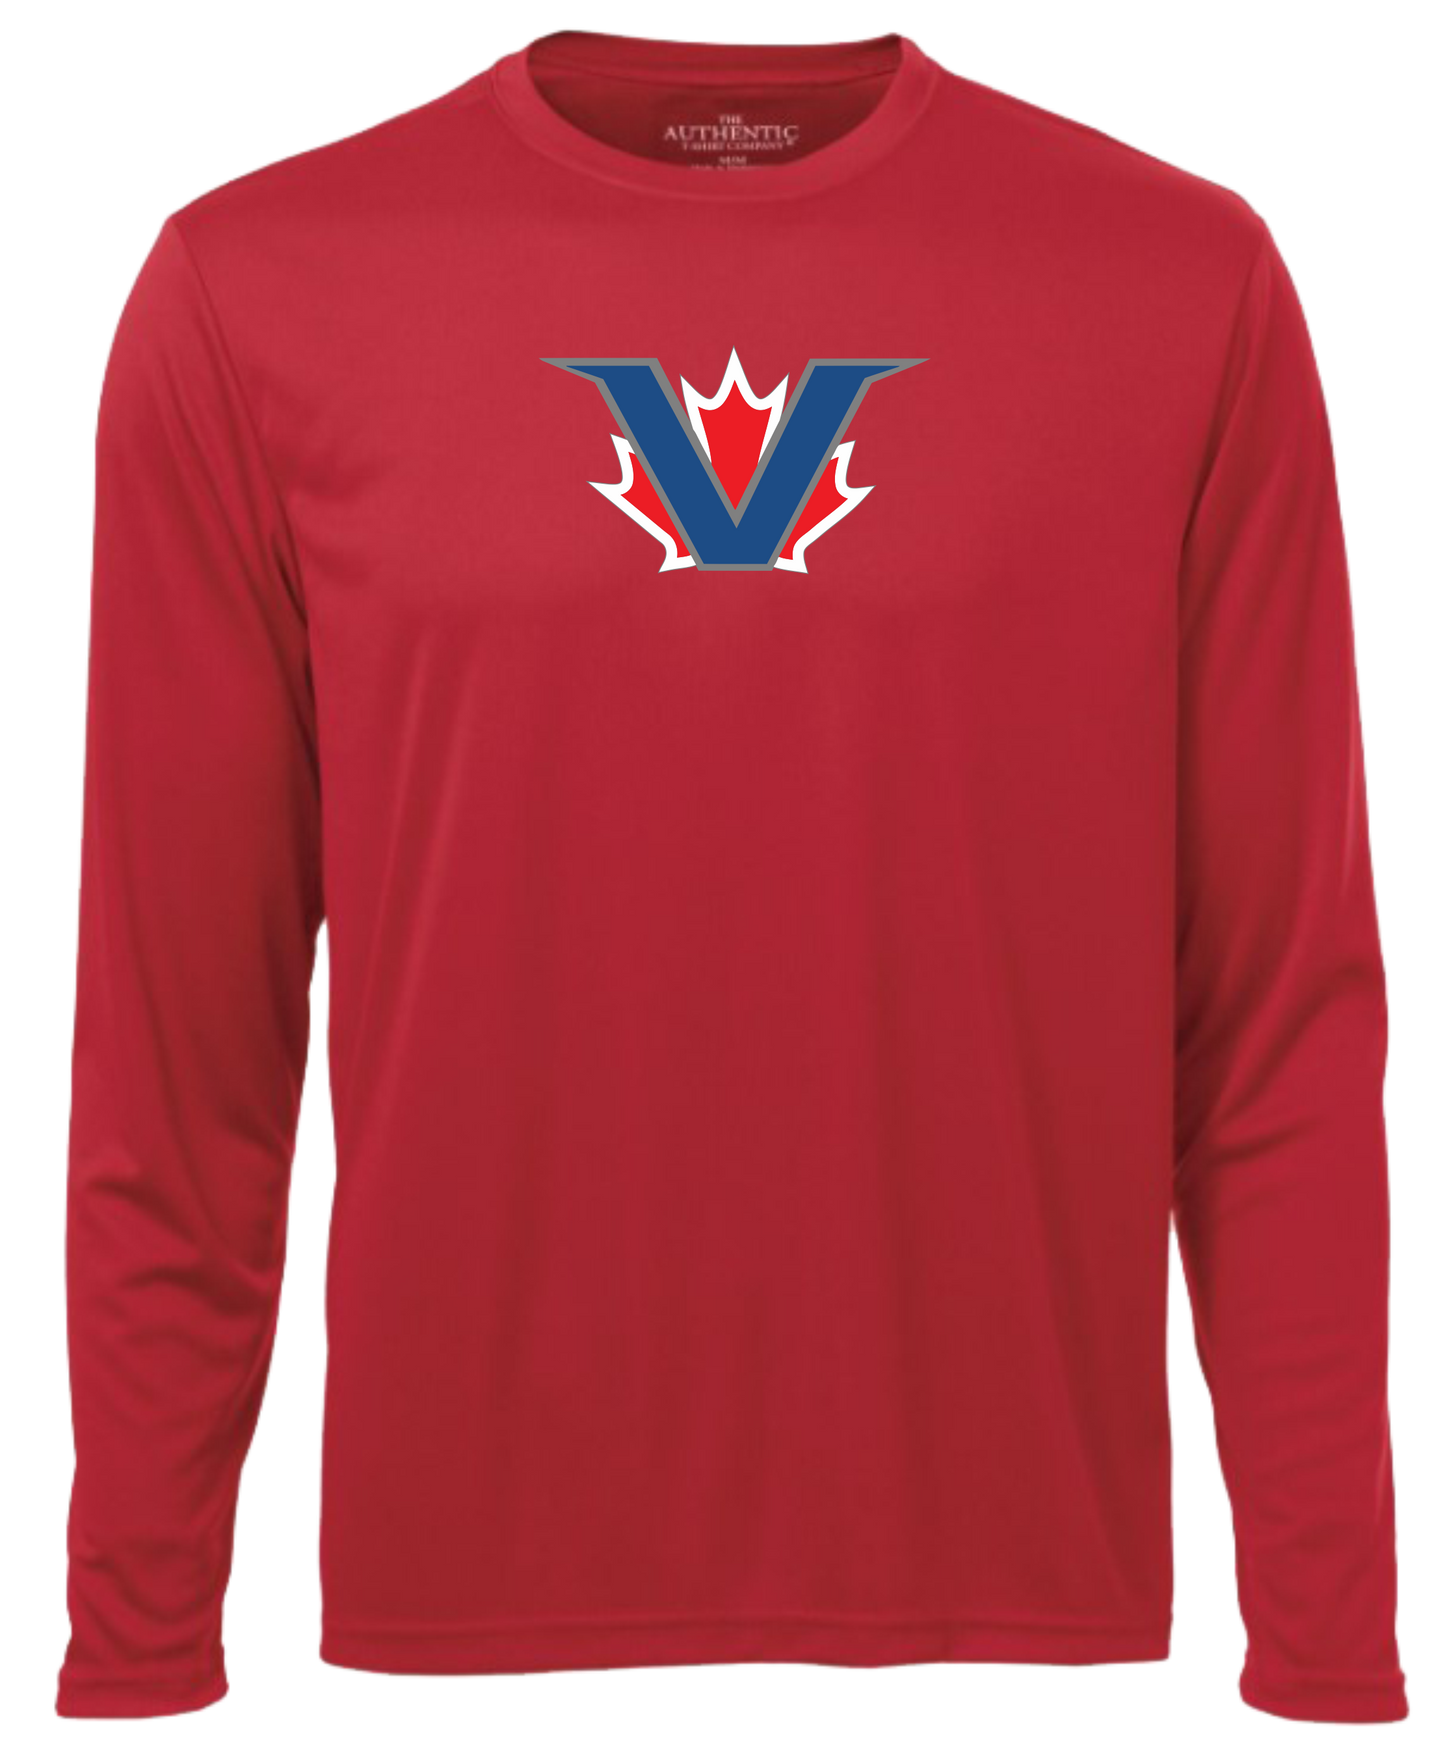 Victoria Capitals North Baseball Unisex and Youth Long Sleeve DriFit Tshirt